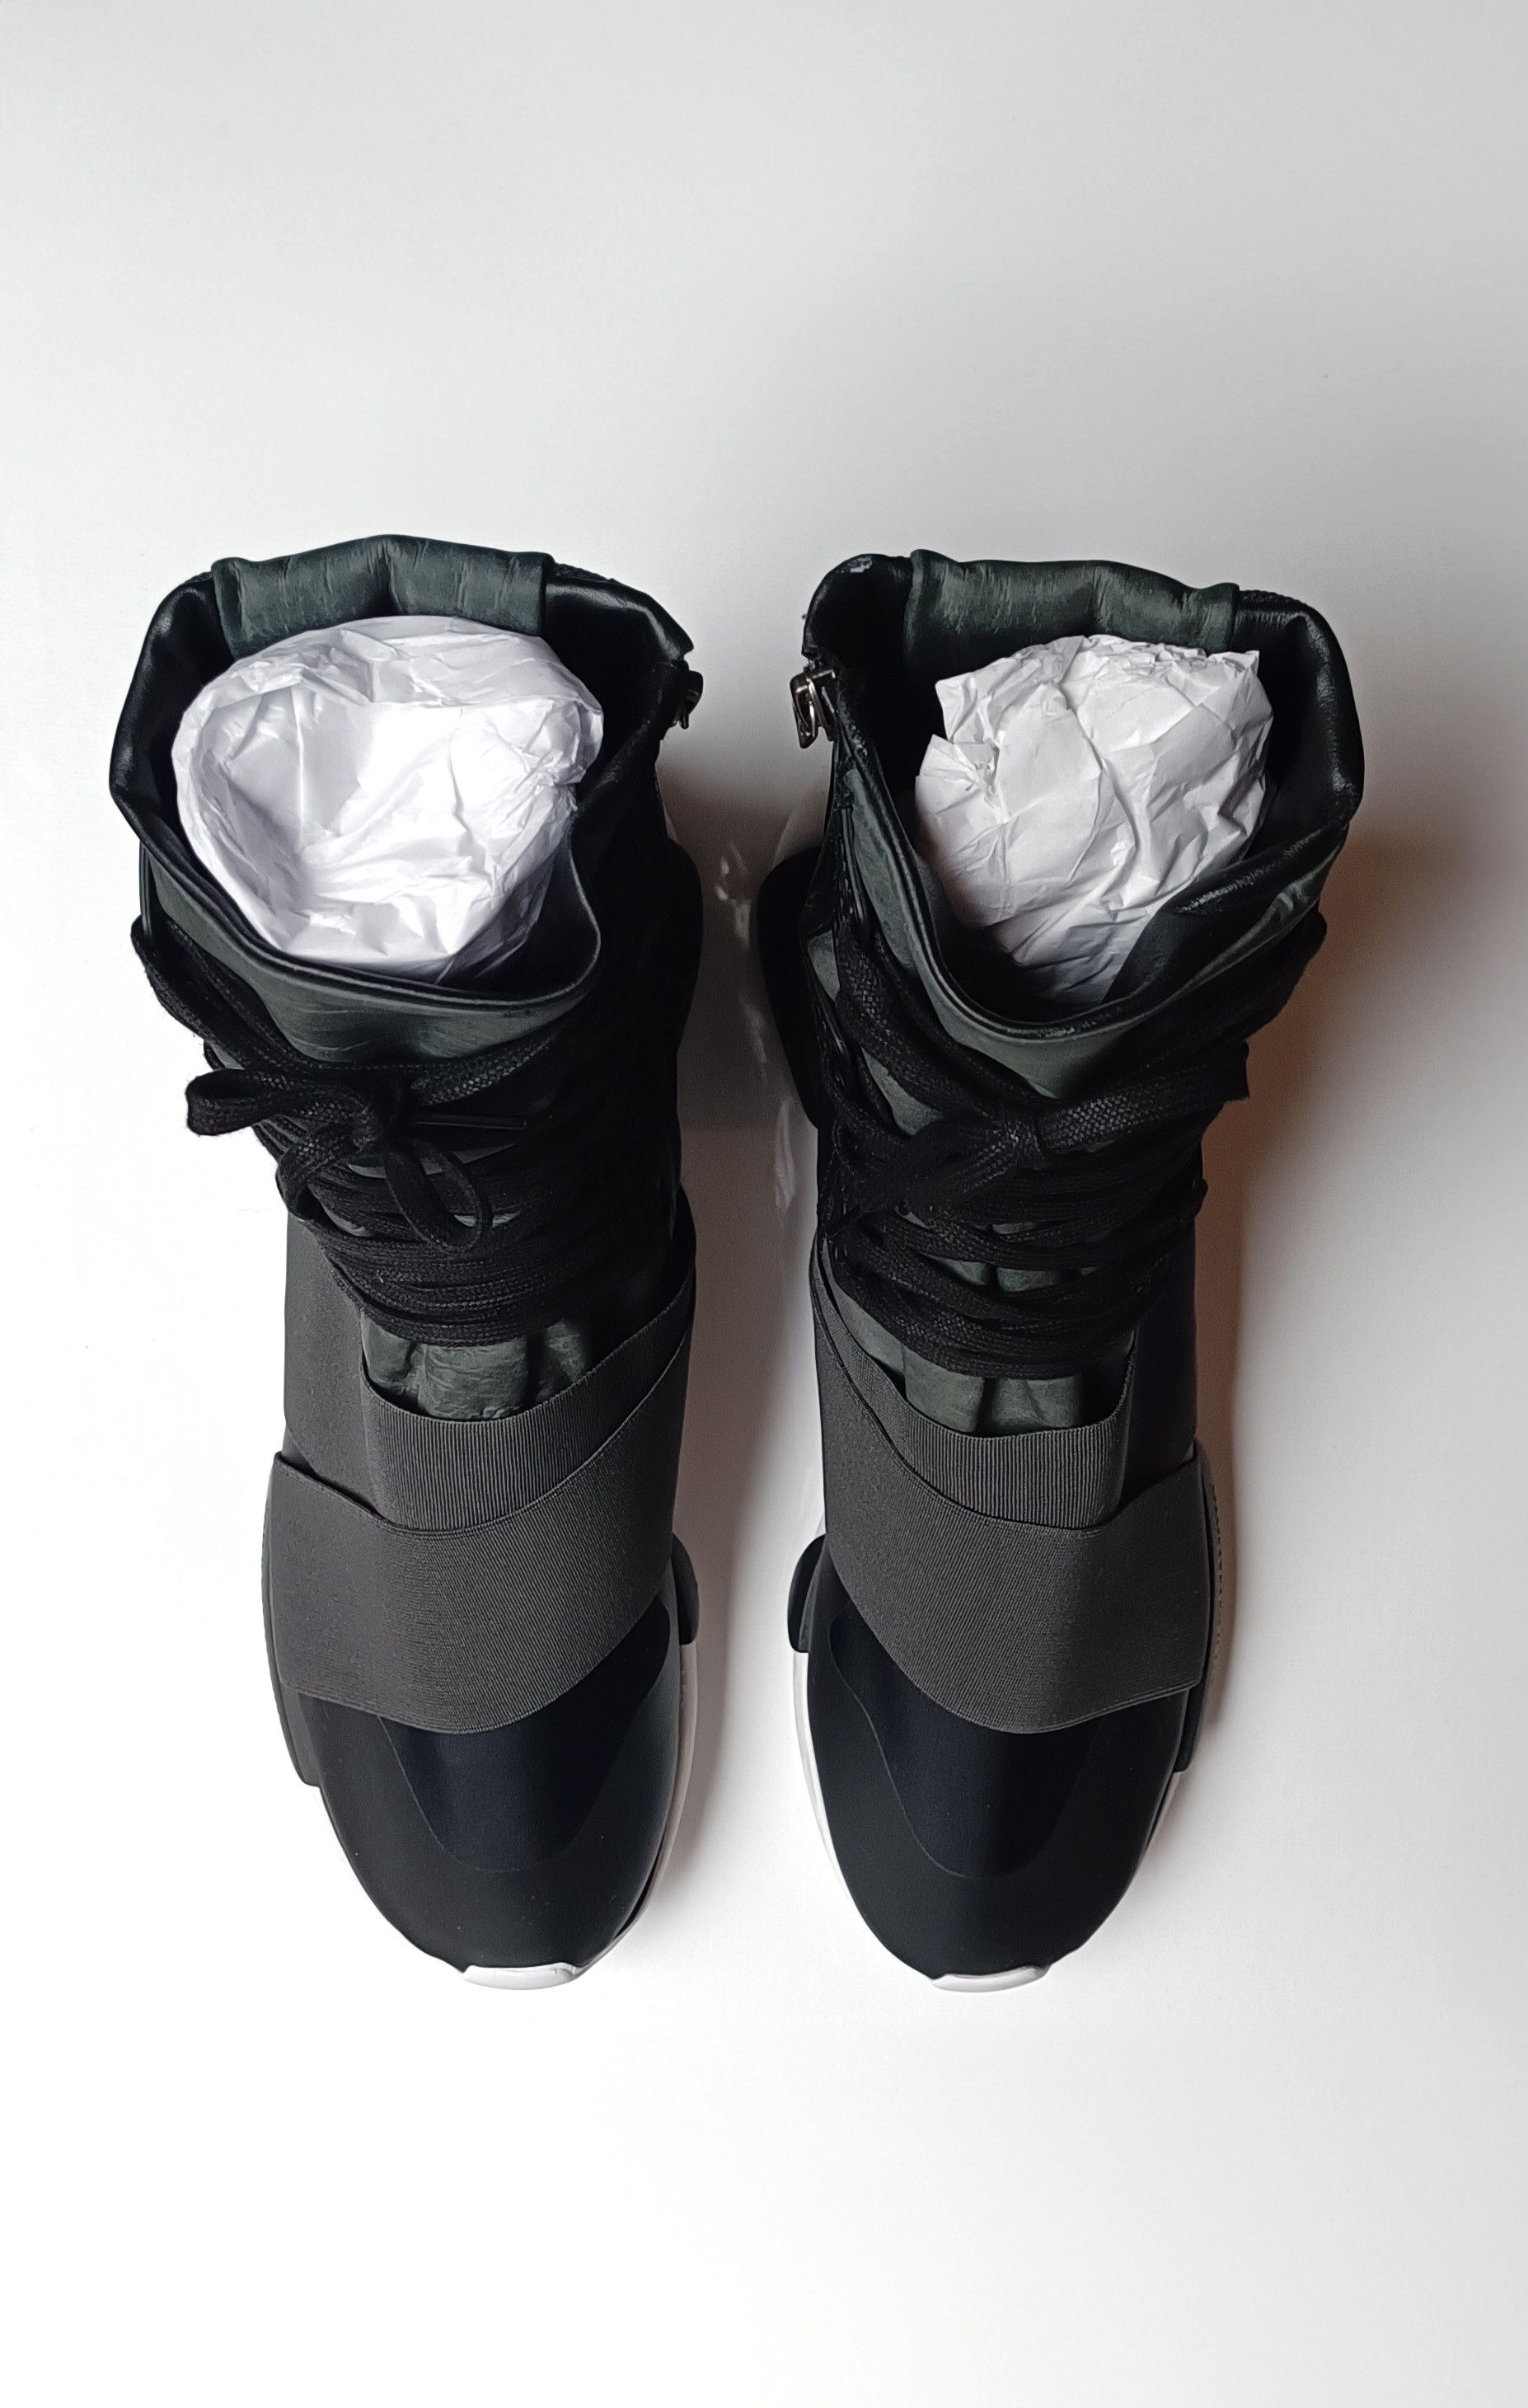 Adidas Y-3 Qasa Boot 'Charcoal Black' - 4